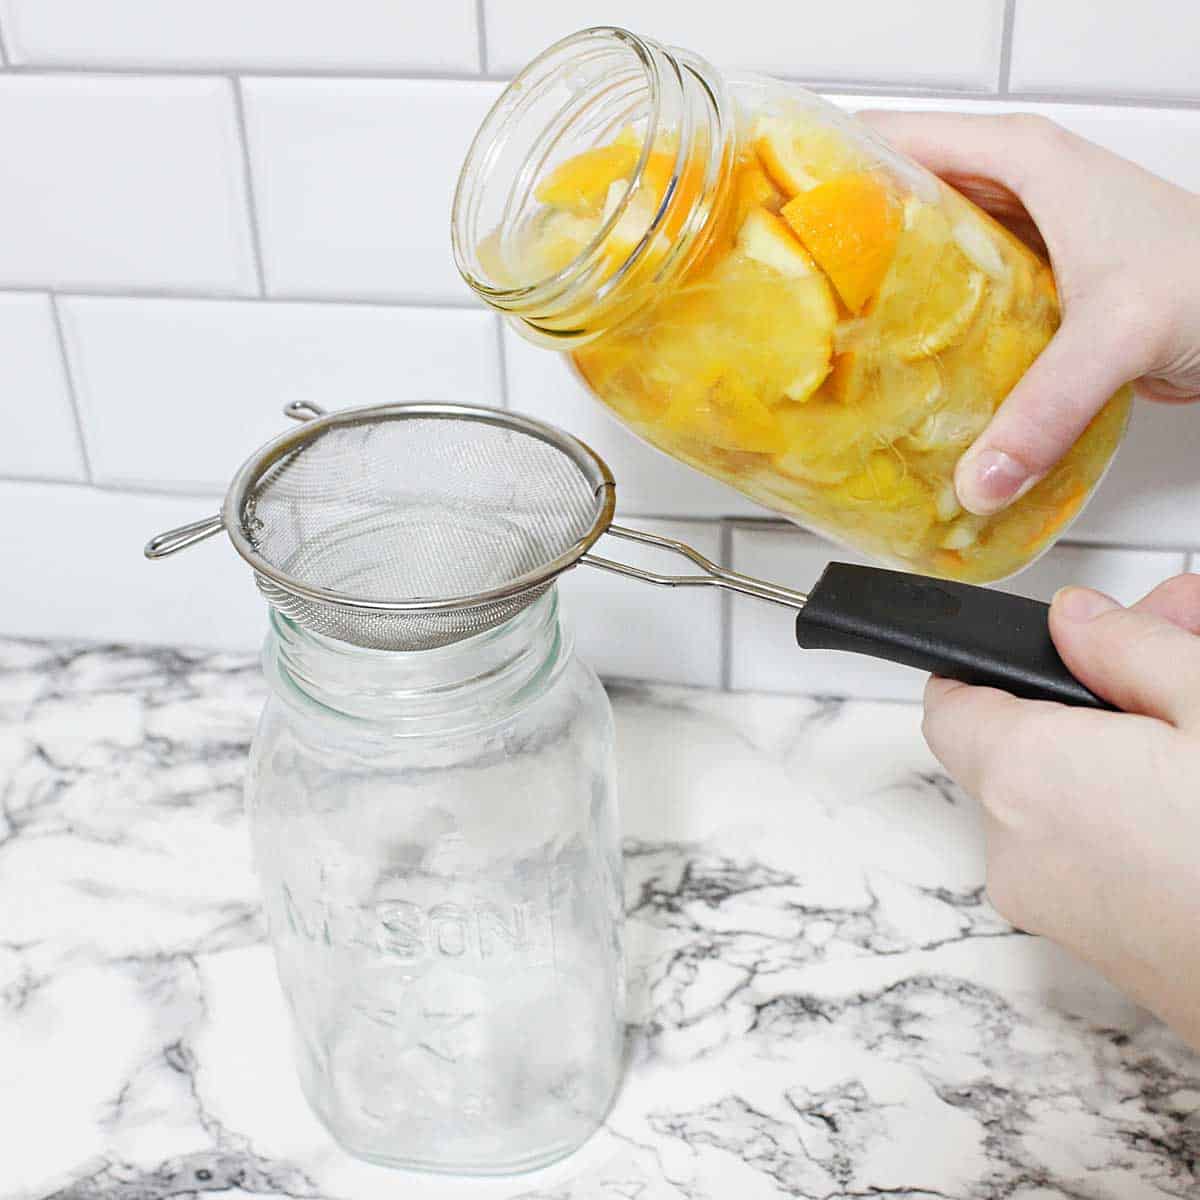 Straining the orange and lemon peel vinegar mixture into a clean jar.